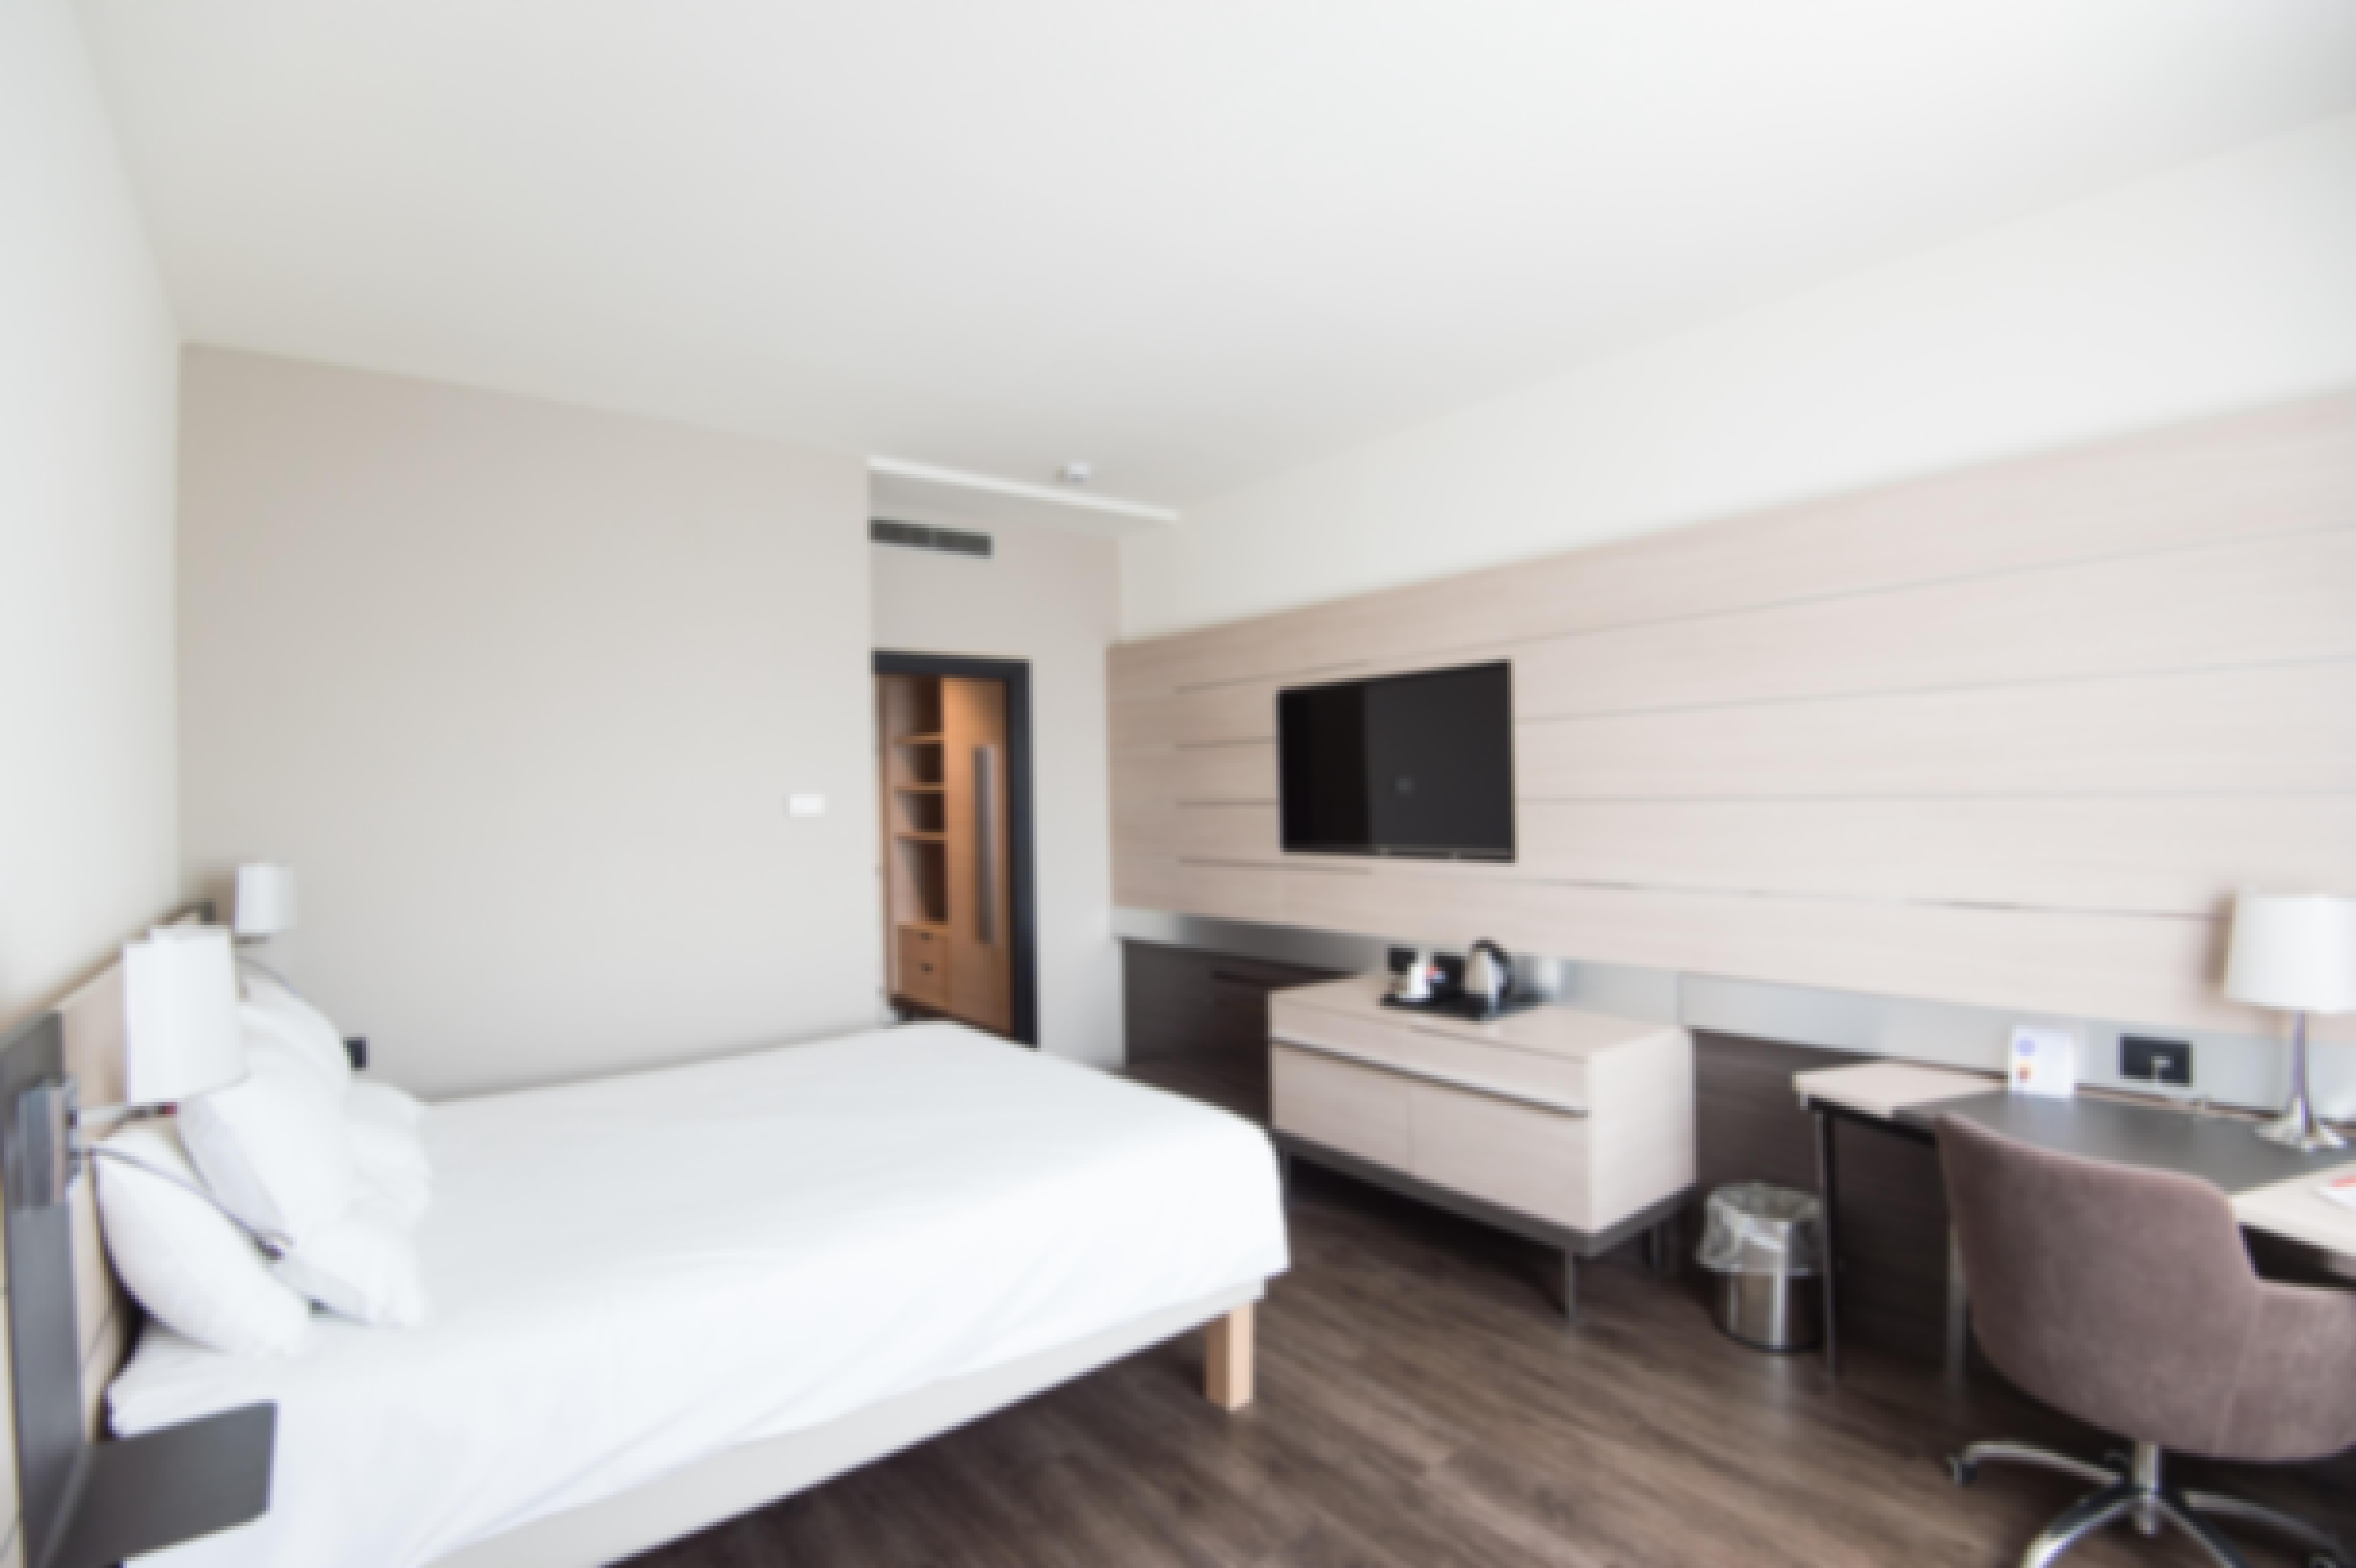 Basic amenities in a modern hotel room